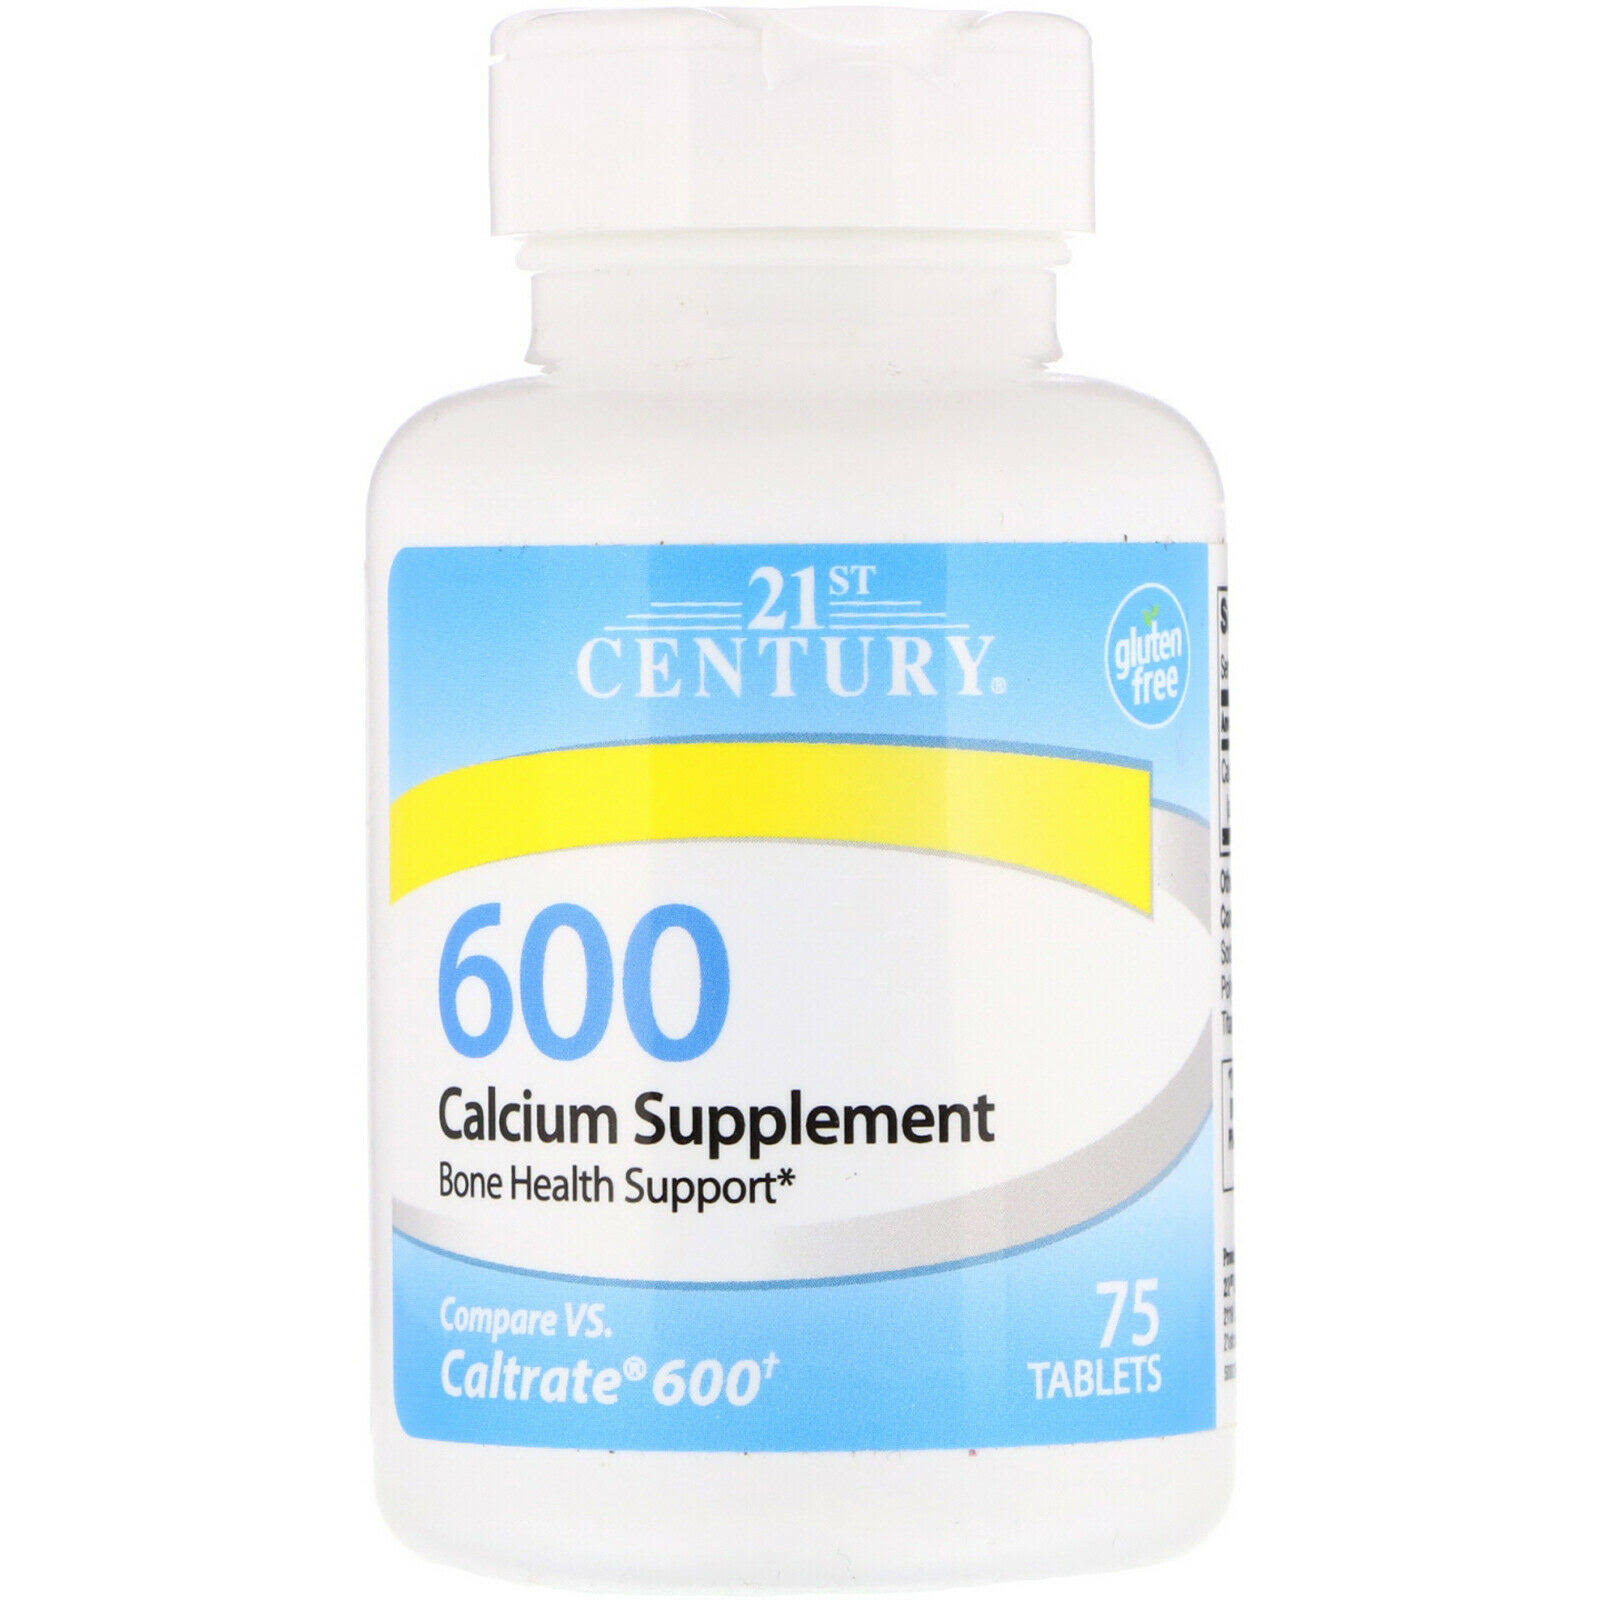 21st Century 600 Calcium Supplement - 75 Tablets